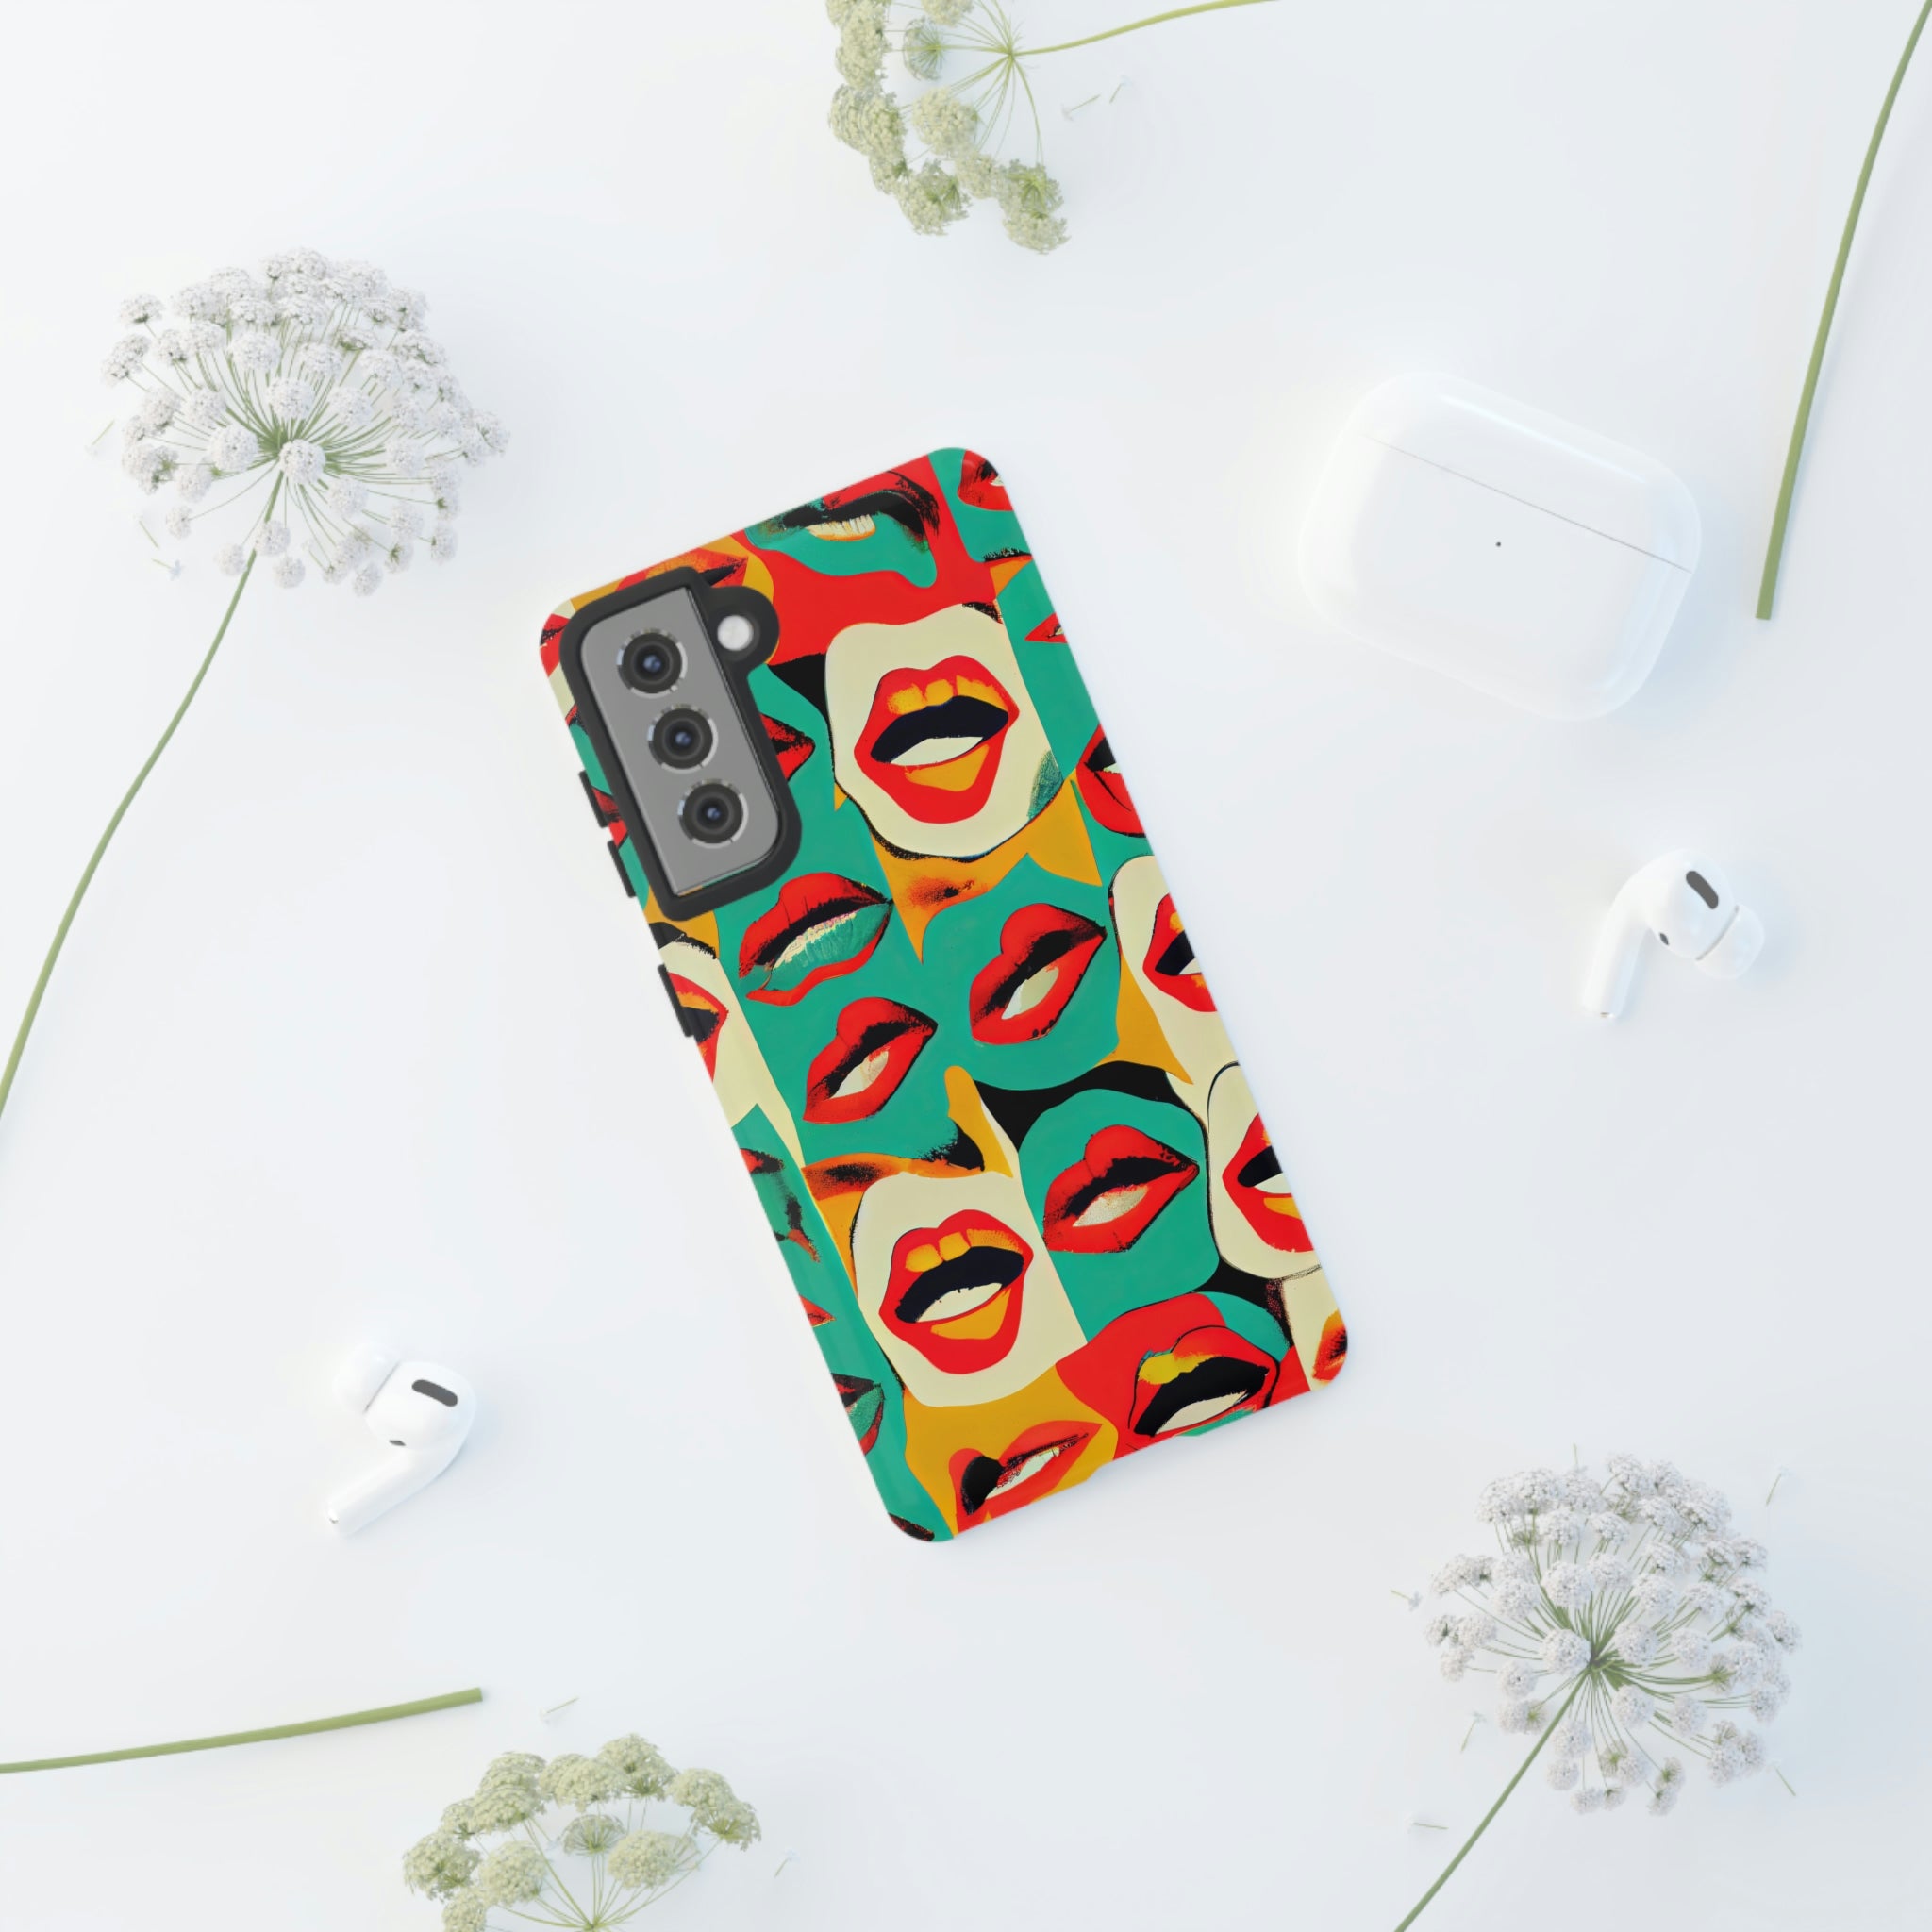 Mouthy Pop Art Phone Case